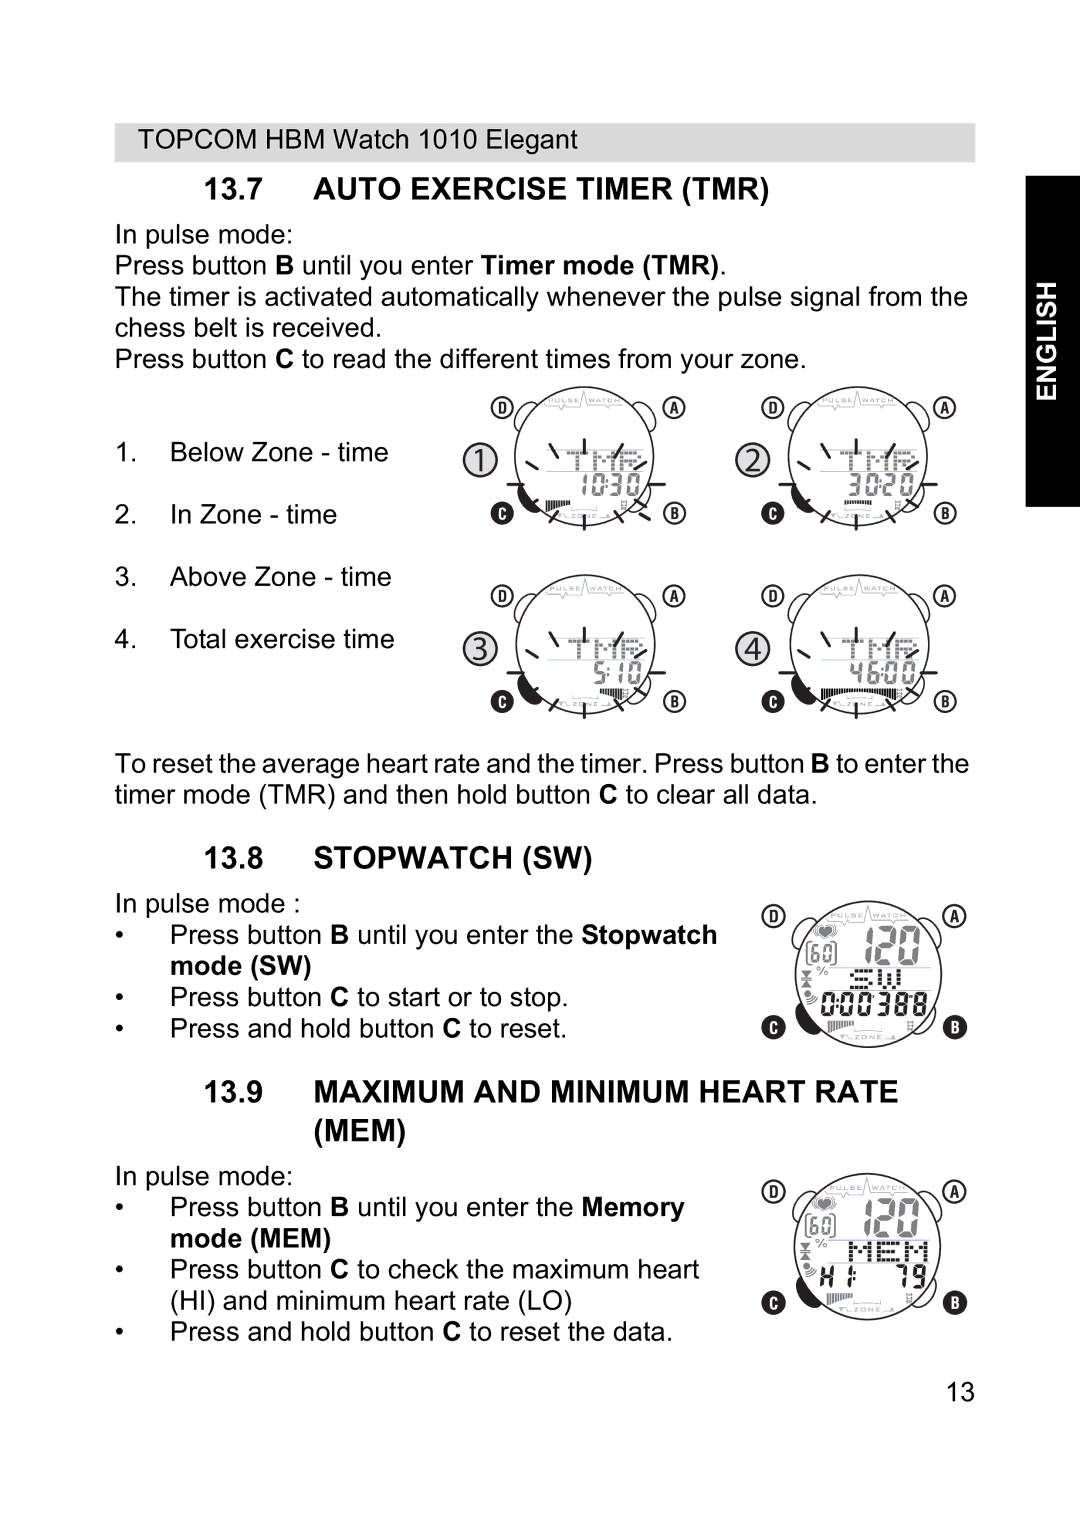 Topcom 1010 Elelgant manual Auto Exercise Timer TMR, Stopwatch SW, Maximum and Minimum Heart Rate MEM 